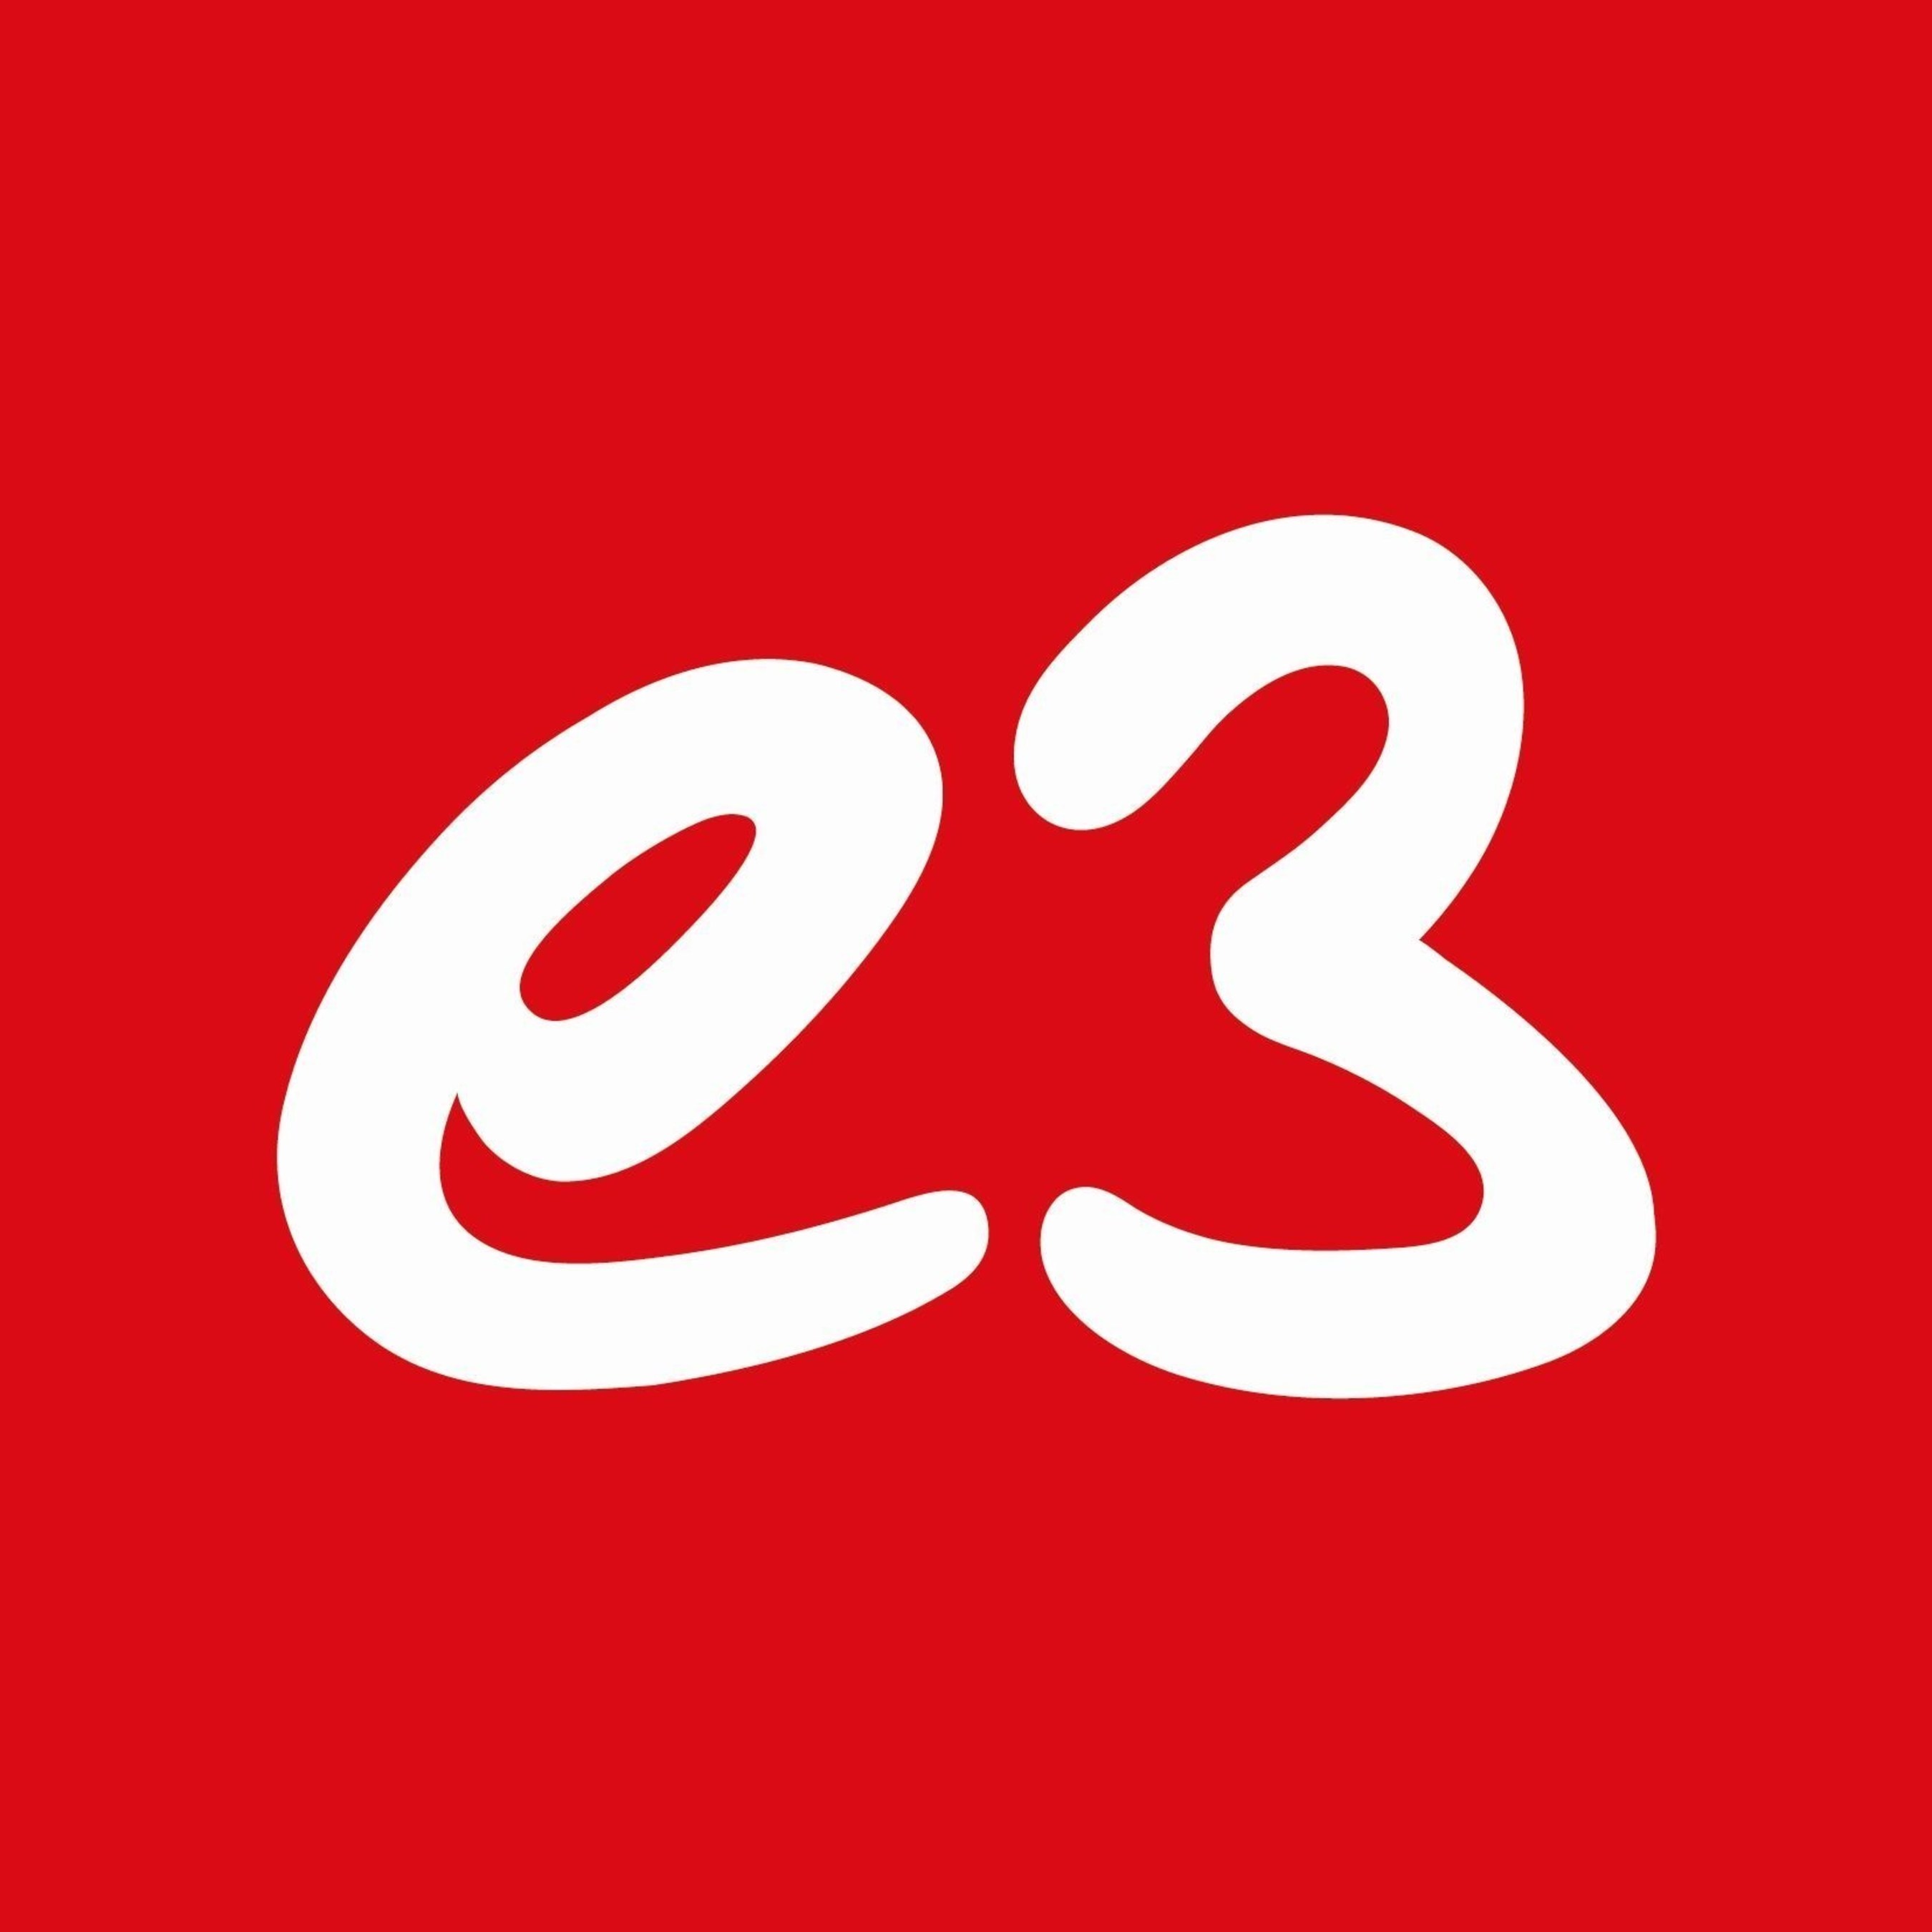 e3 logo (PRNewsFoto/e3) (PRNewsFoto/e3)